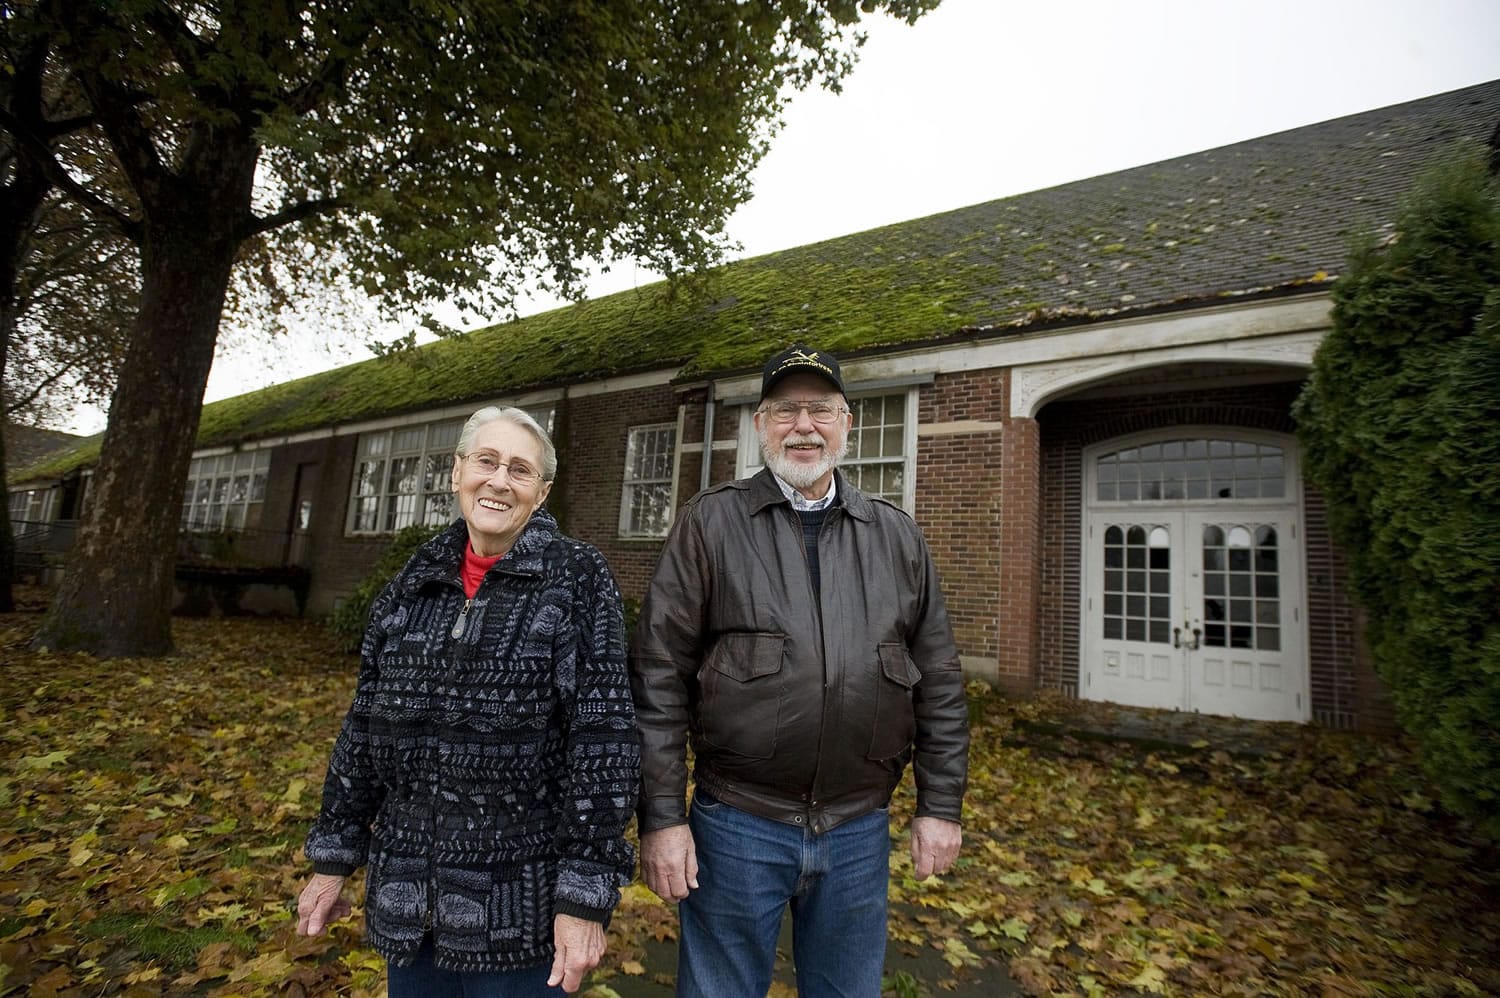 Pat Somdalen, left, and Bill Tucker both attended school at Battle Ground Central School.